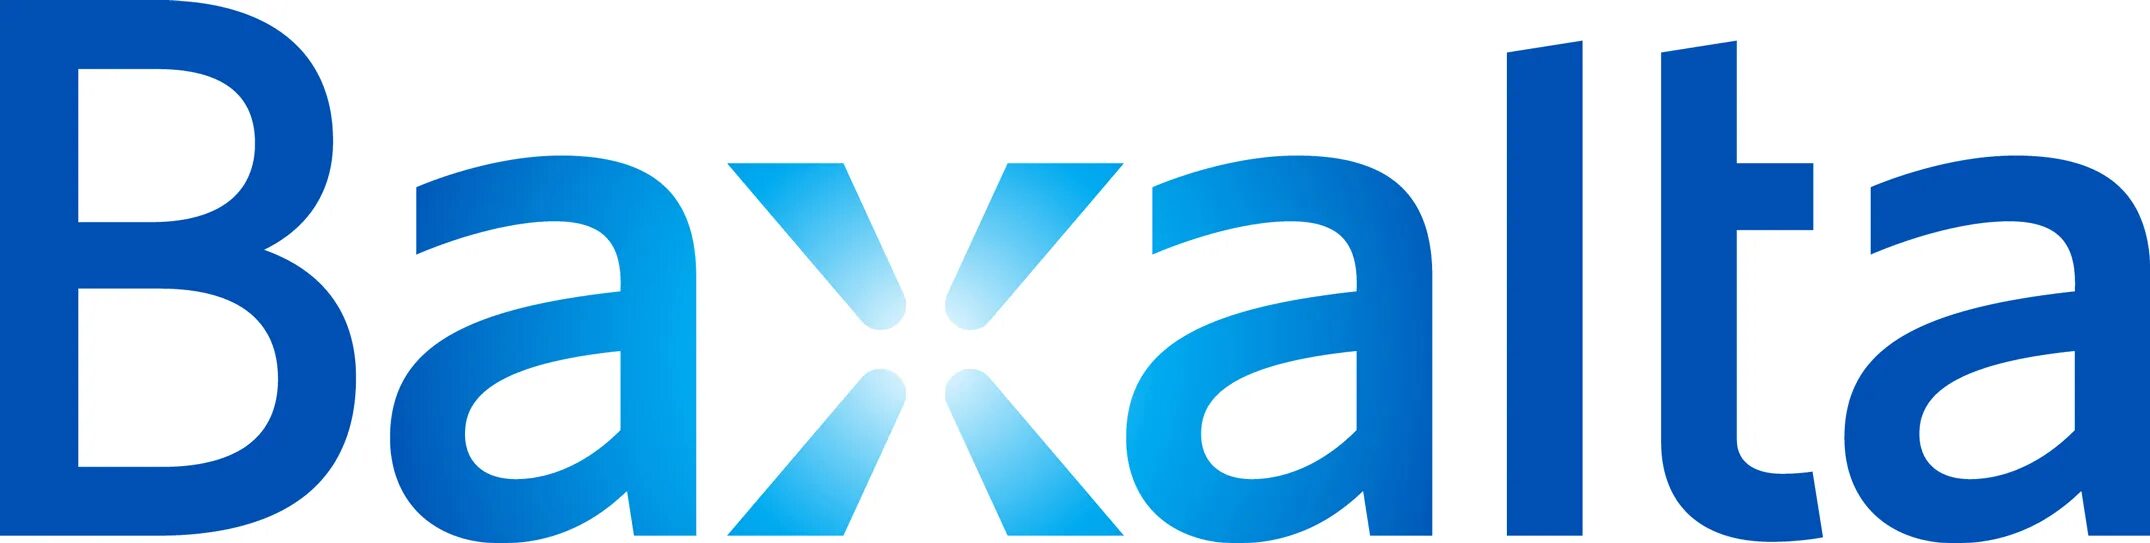 Shire компания. Shire (Pharmaceutical Company). Baxalta. Logo кондиционеров Baff.